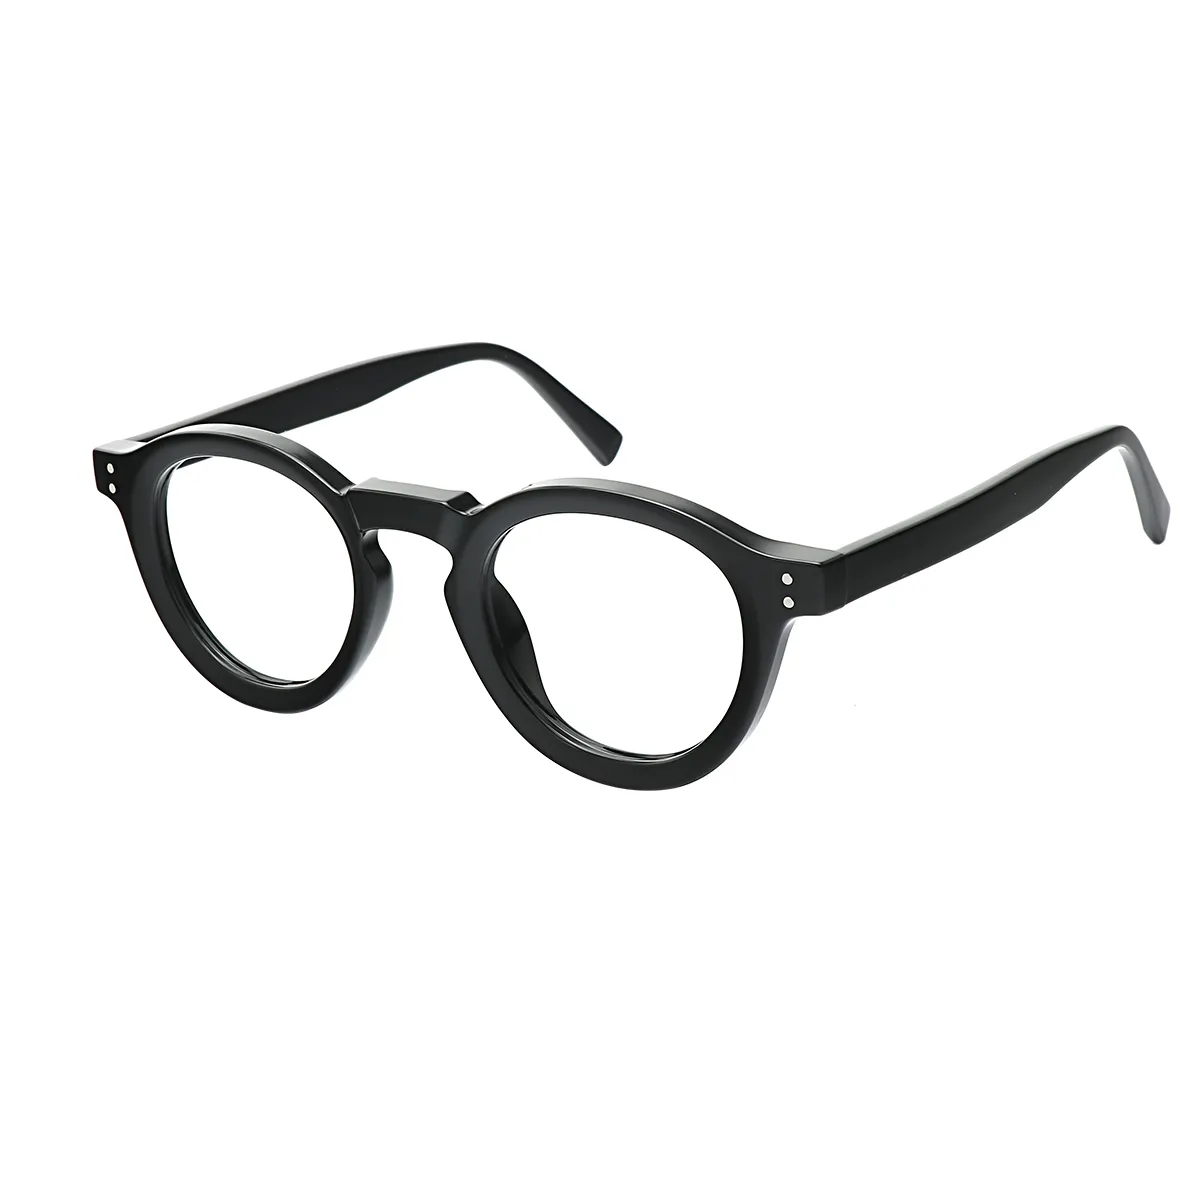 Fashion Round Grey/Transparent Reading Glasses for Women & Men